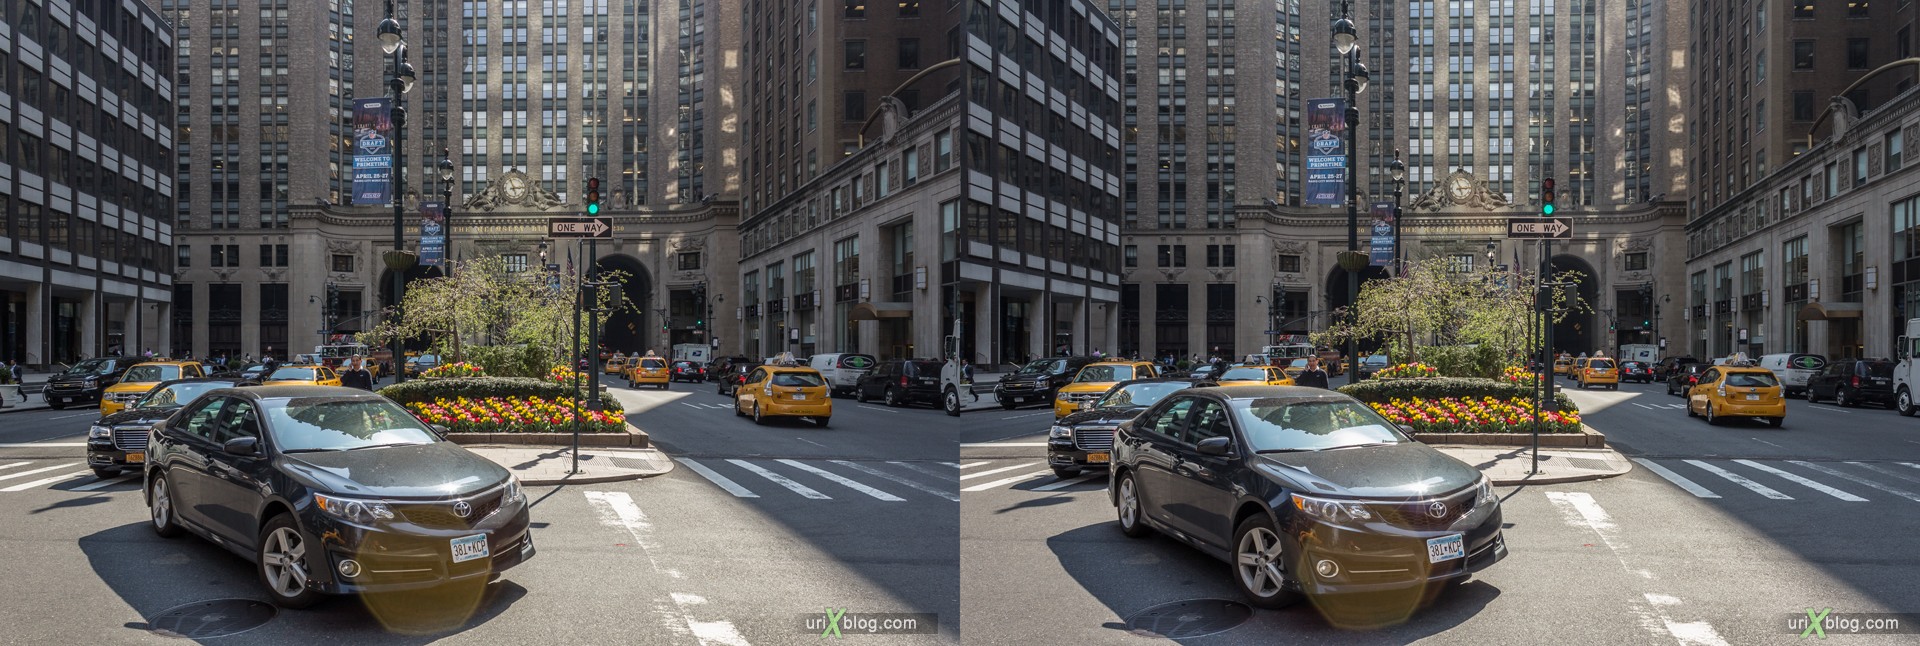 2013, Park Ave, NYC, New York City, USA, 3D, stereo pair, cross-eyed, crossview, cross view stereo pair, stereoscopic